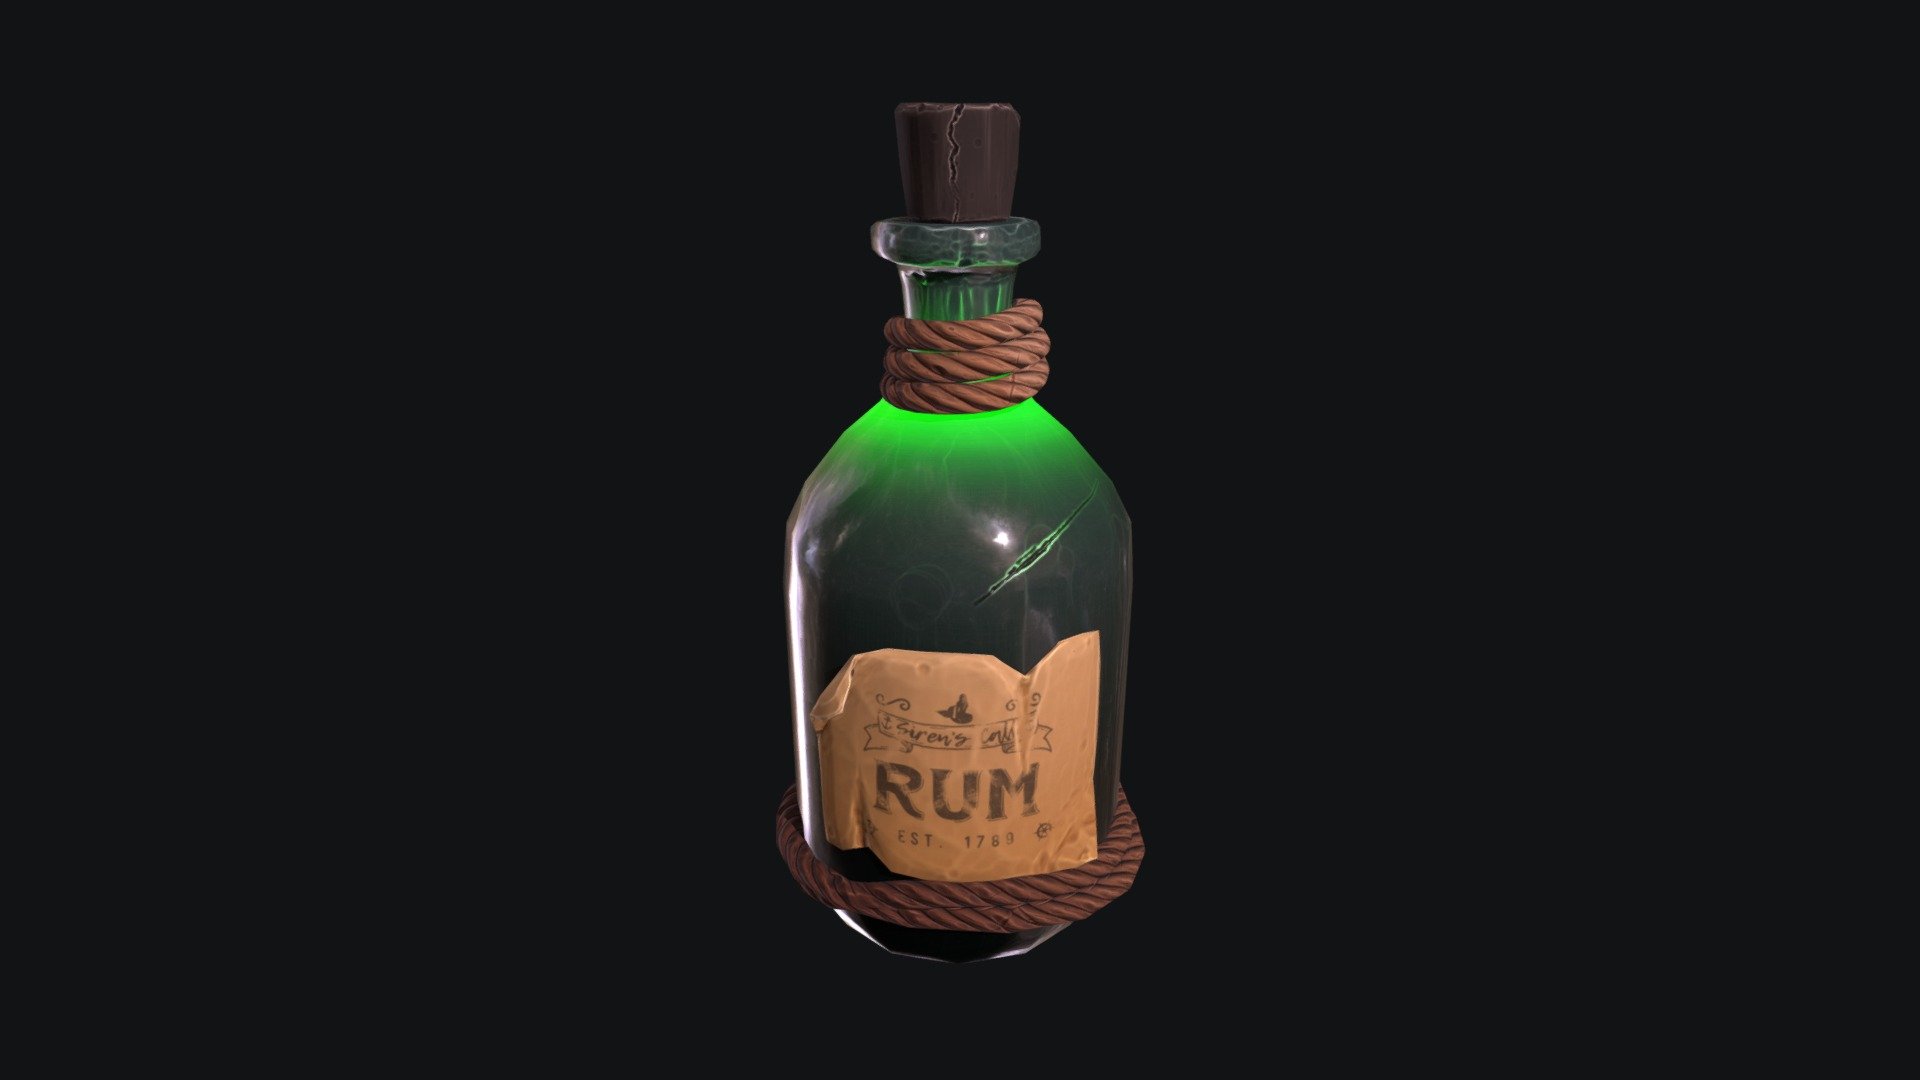 pirate rum bottle prop